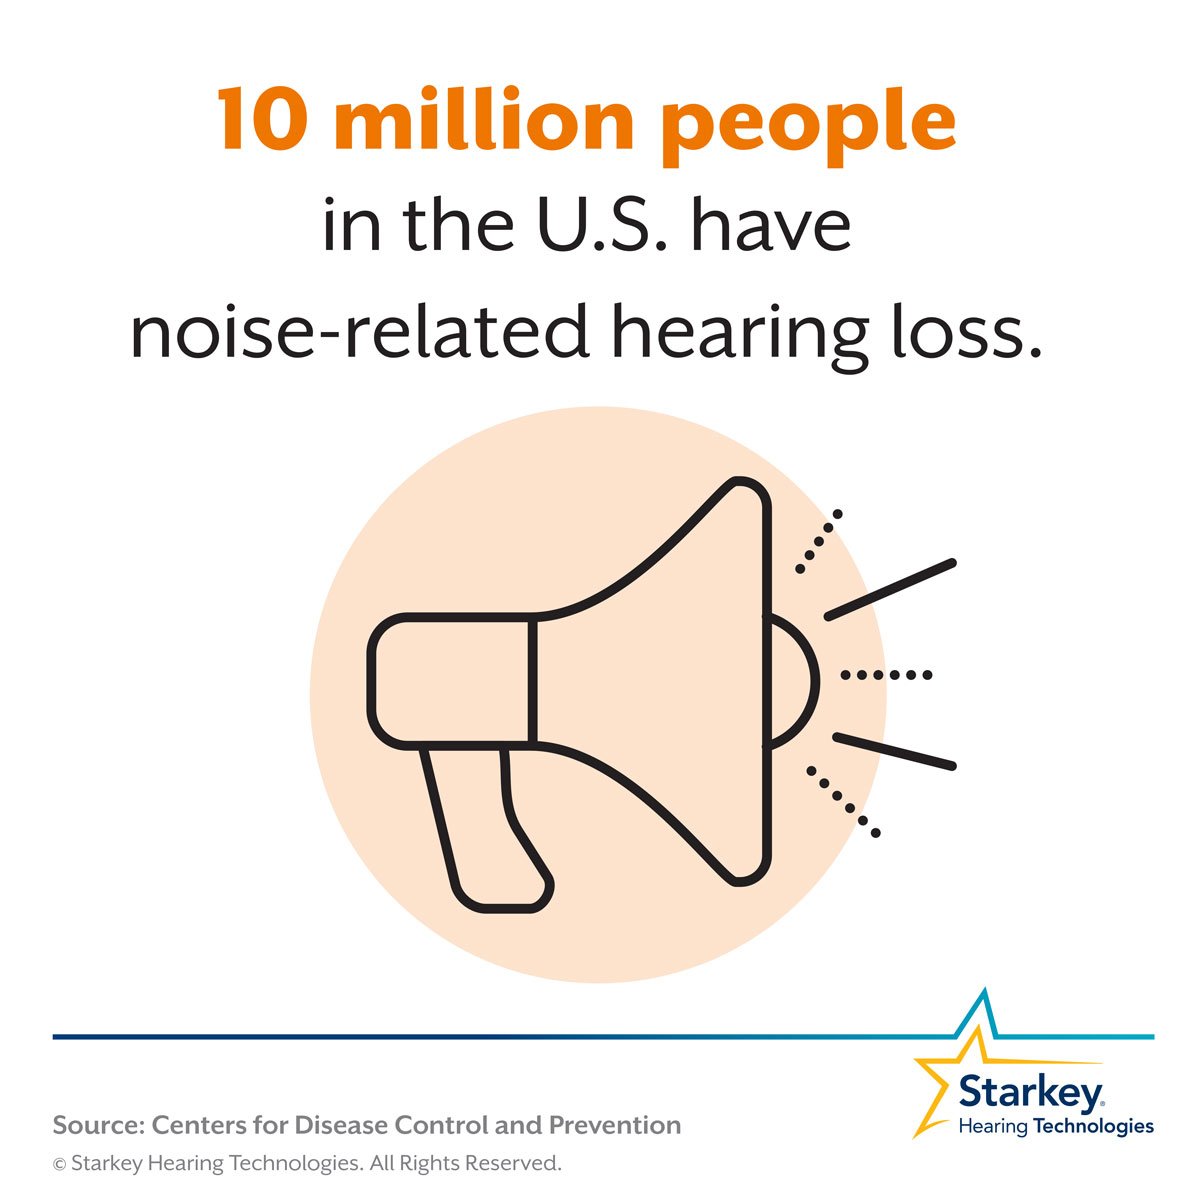 #HearingFactFriday: It